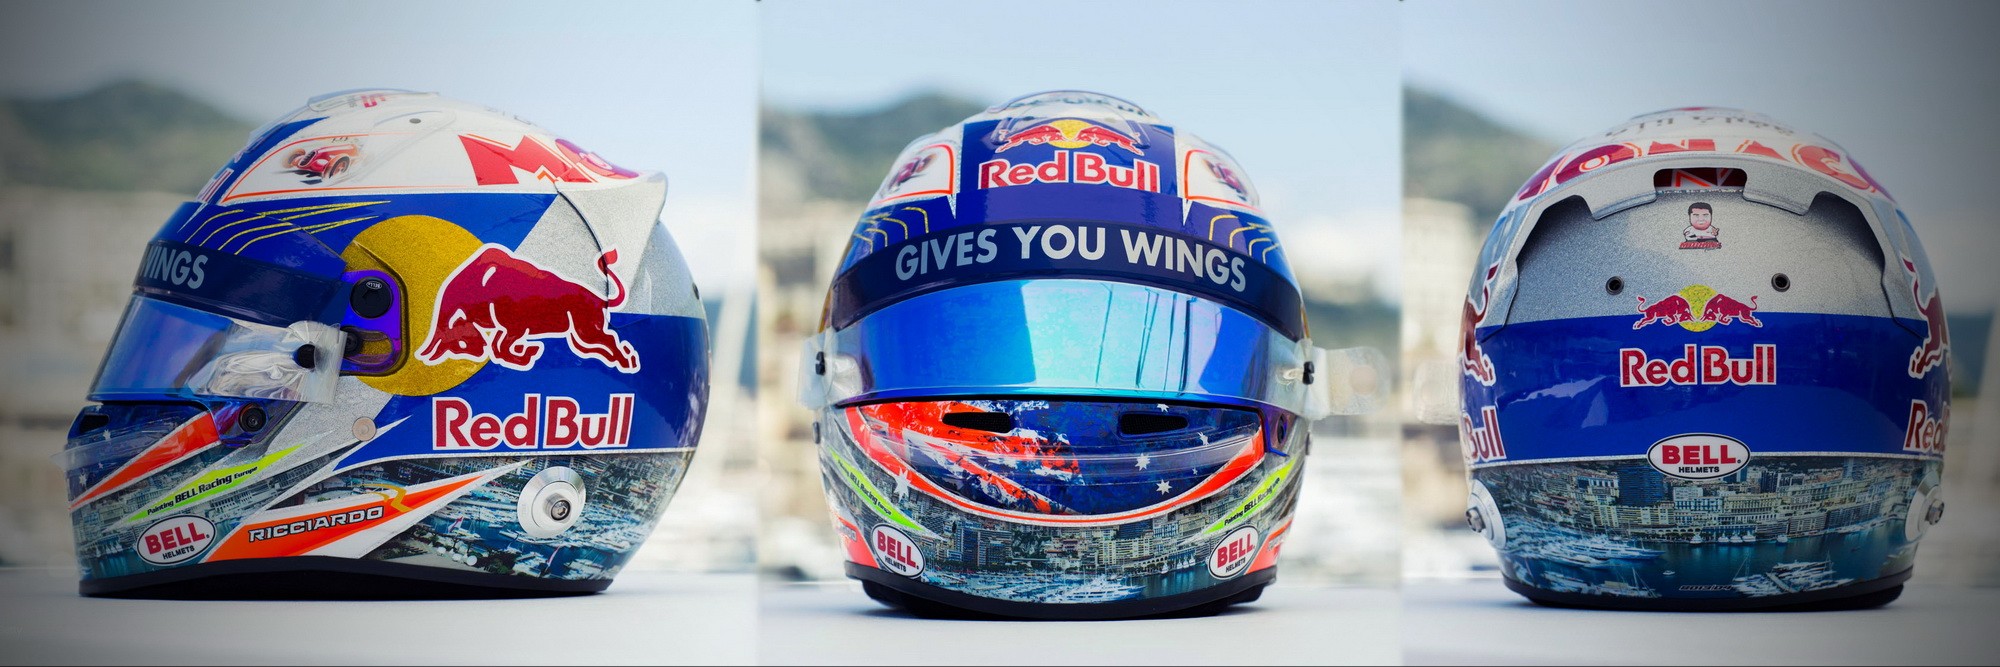 Шлем Даниэля Риккьярдо на Гран-При Монако 2013 | 2013 Monaco Grand Prix helmet of Daniel Ricciardo